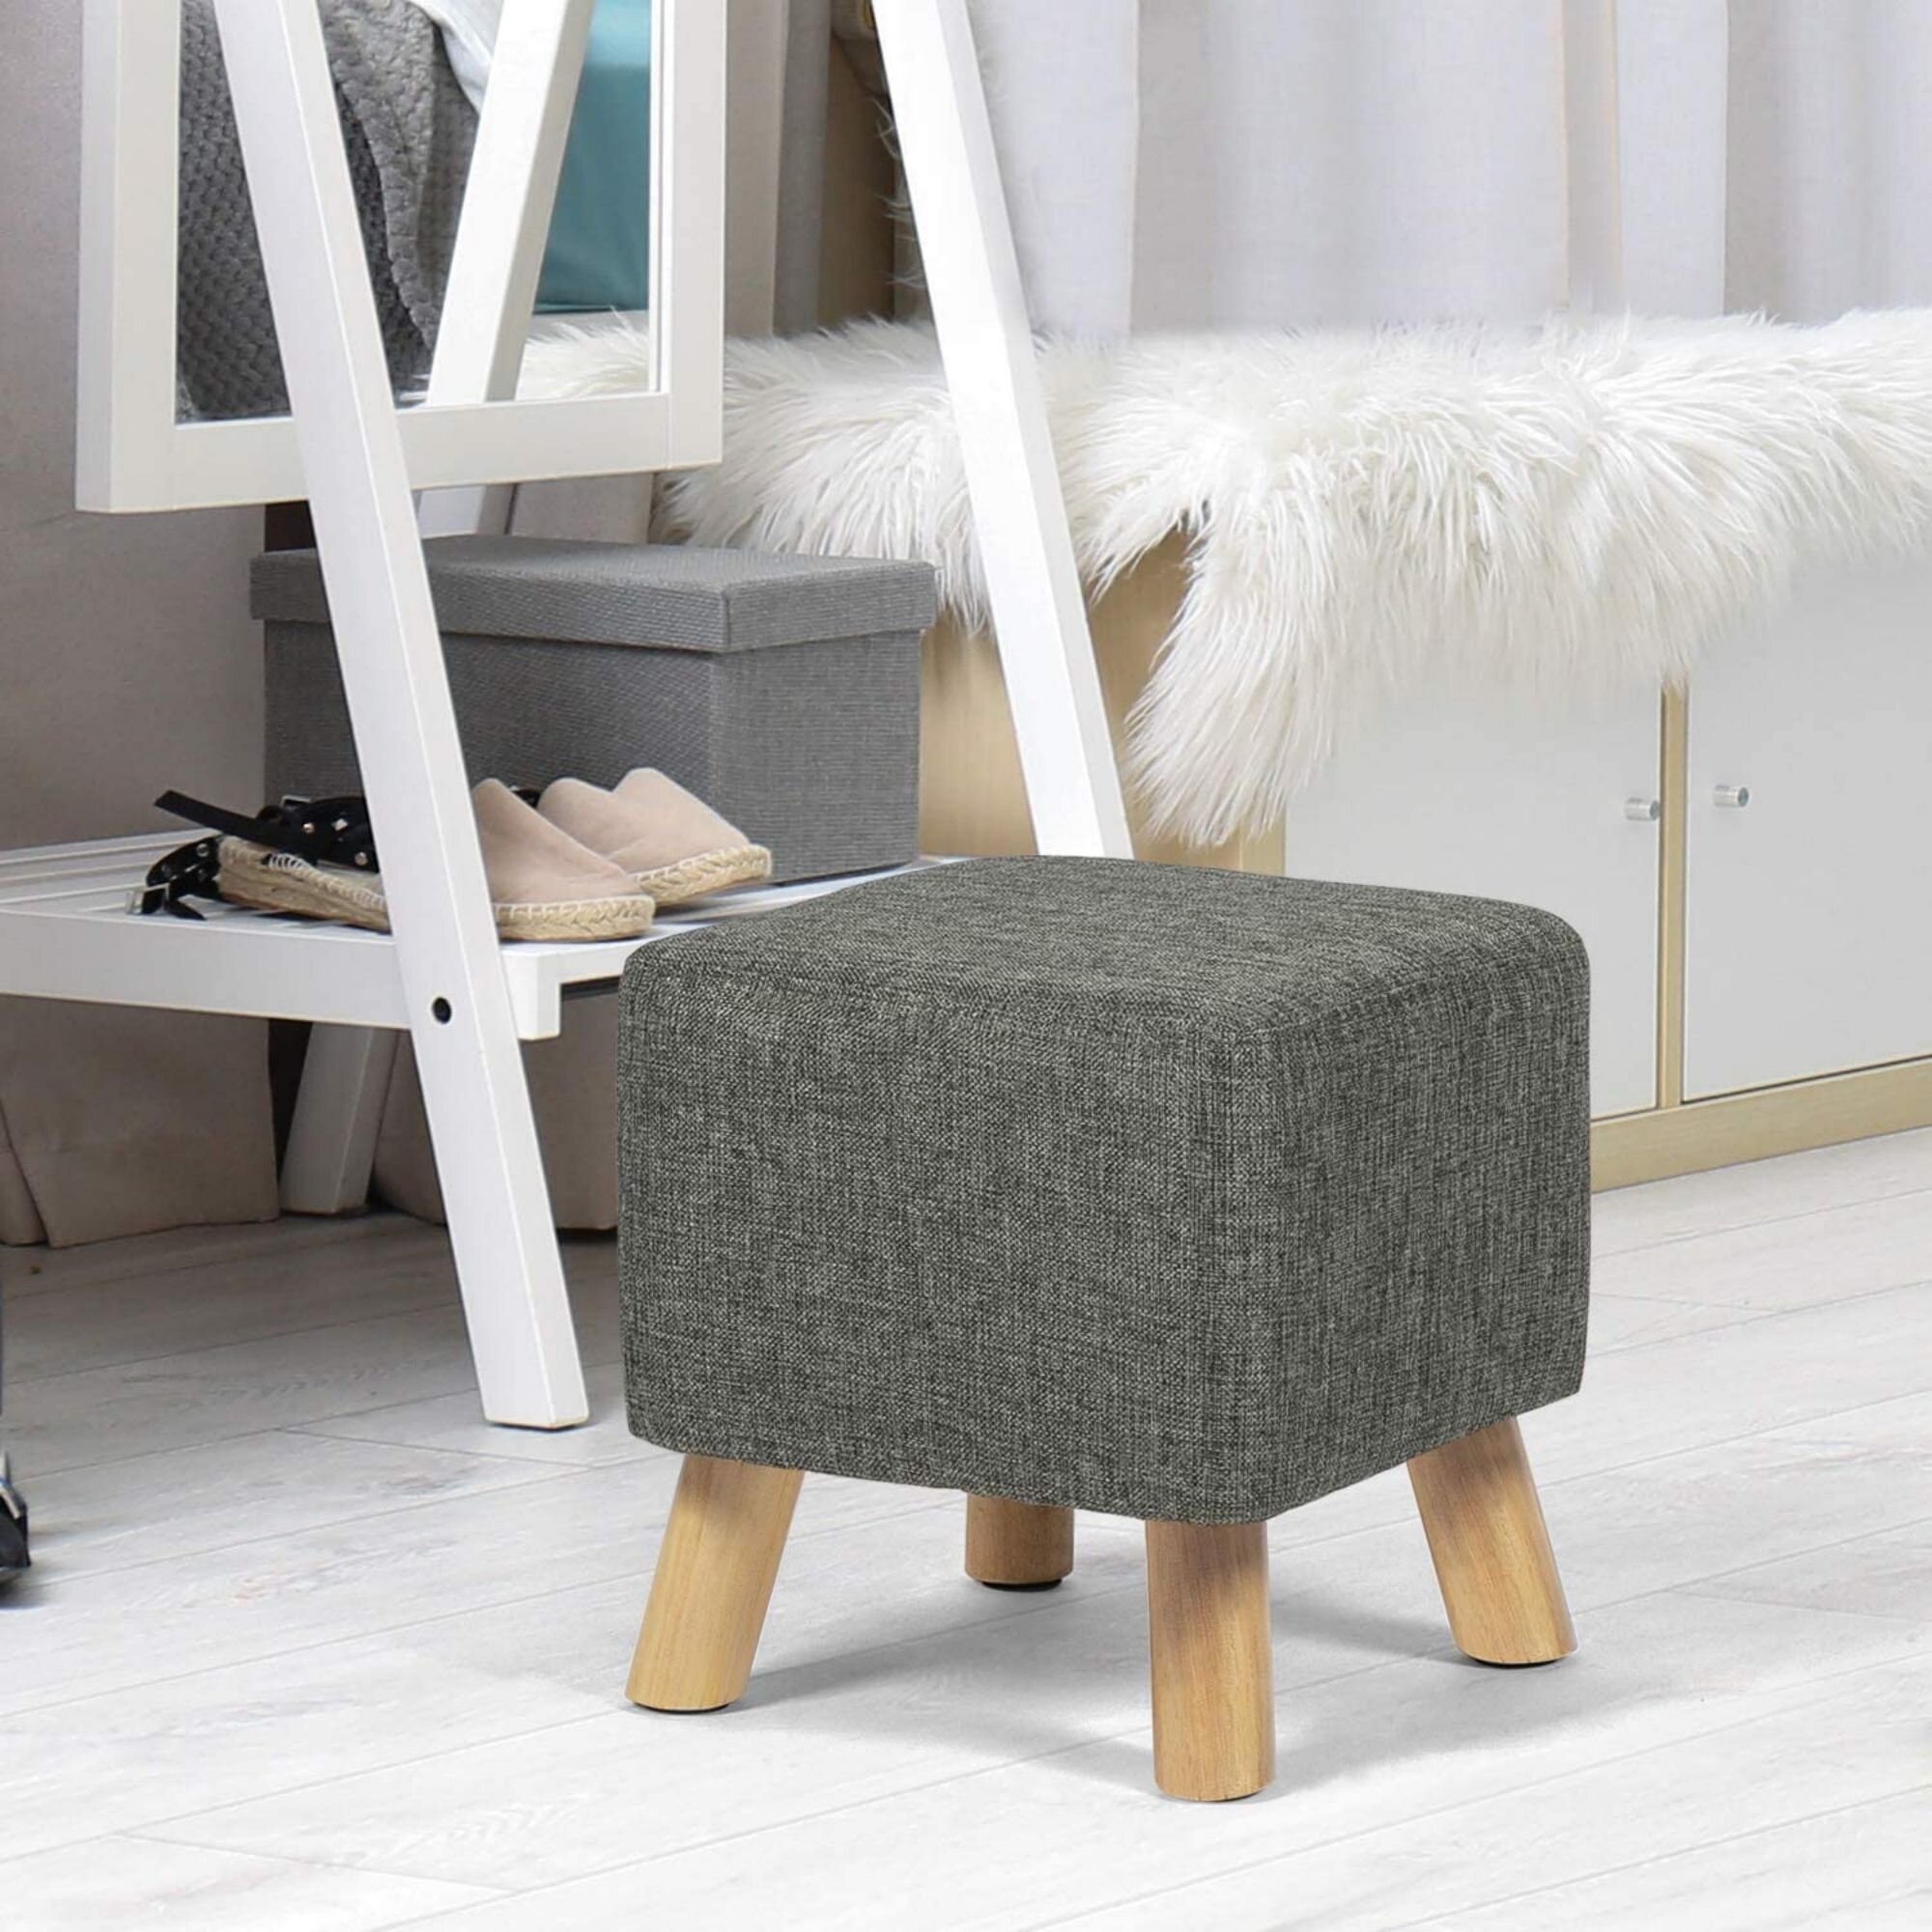 Wood Legs Fabric Rest Stool Footstool Chair Ottoman Rest Padded Top Pouffe Shape 